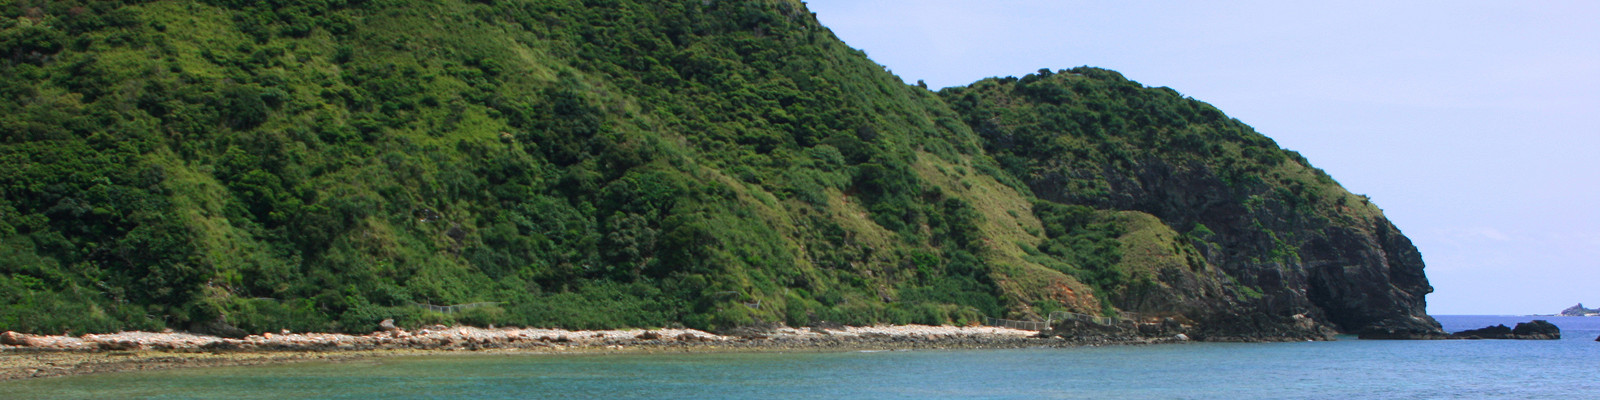 Остров Окинава